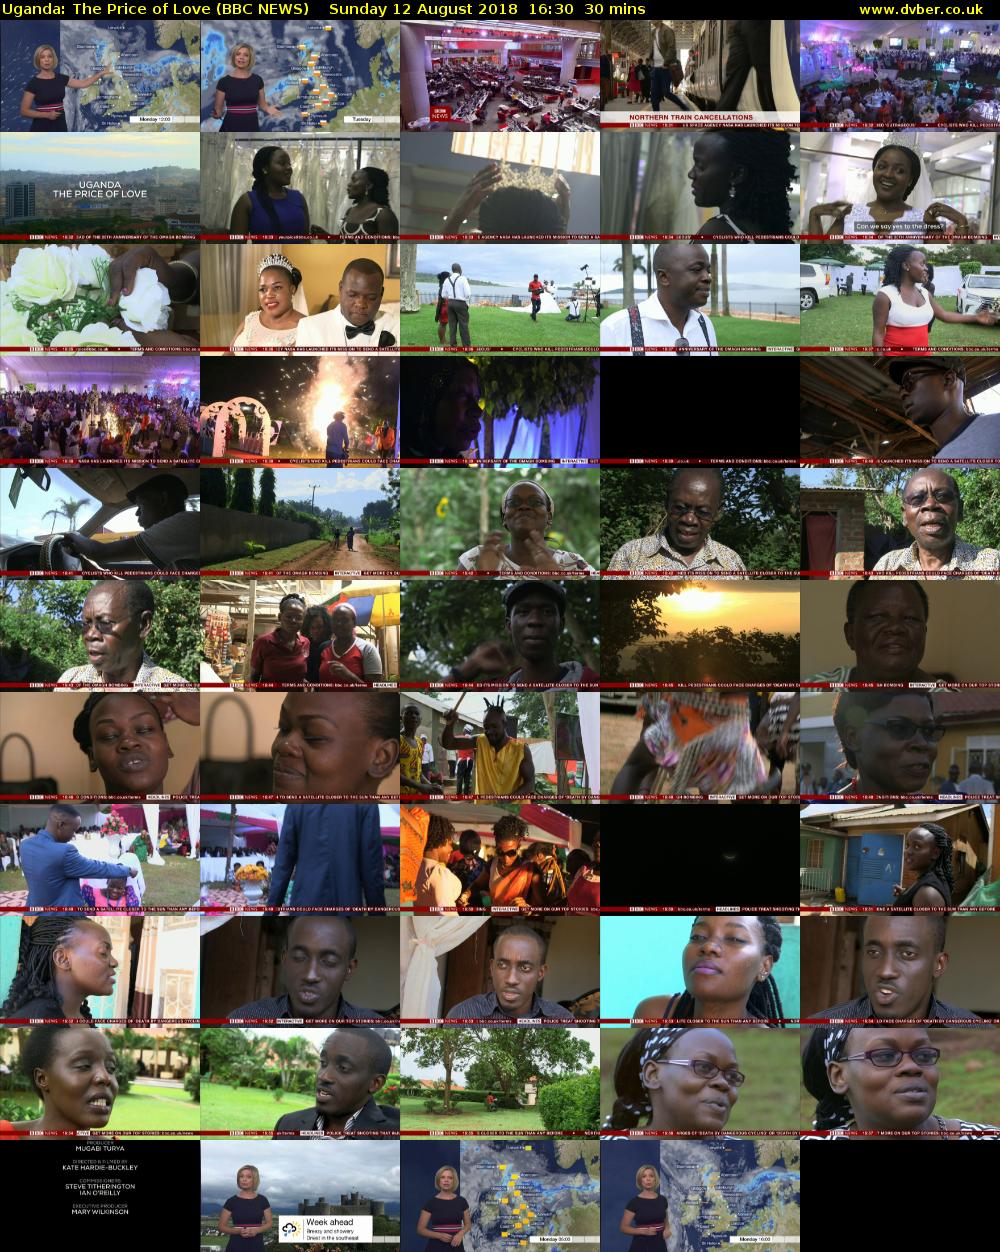 Uganda: The Price of Love (BBC NEWS) Sunday 12 August 2018 16:30 - 17:00